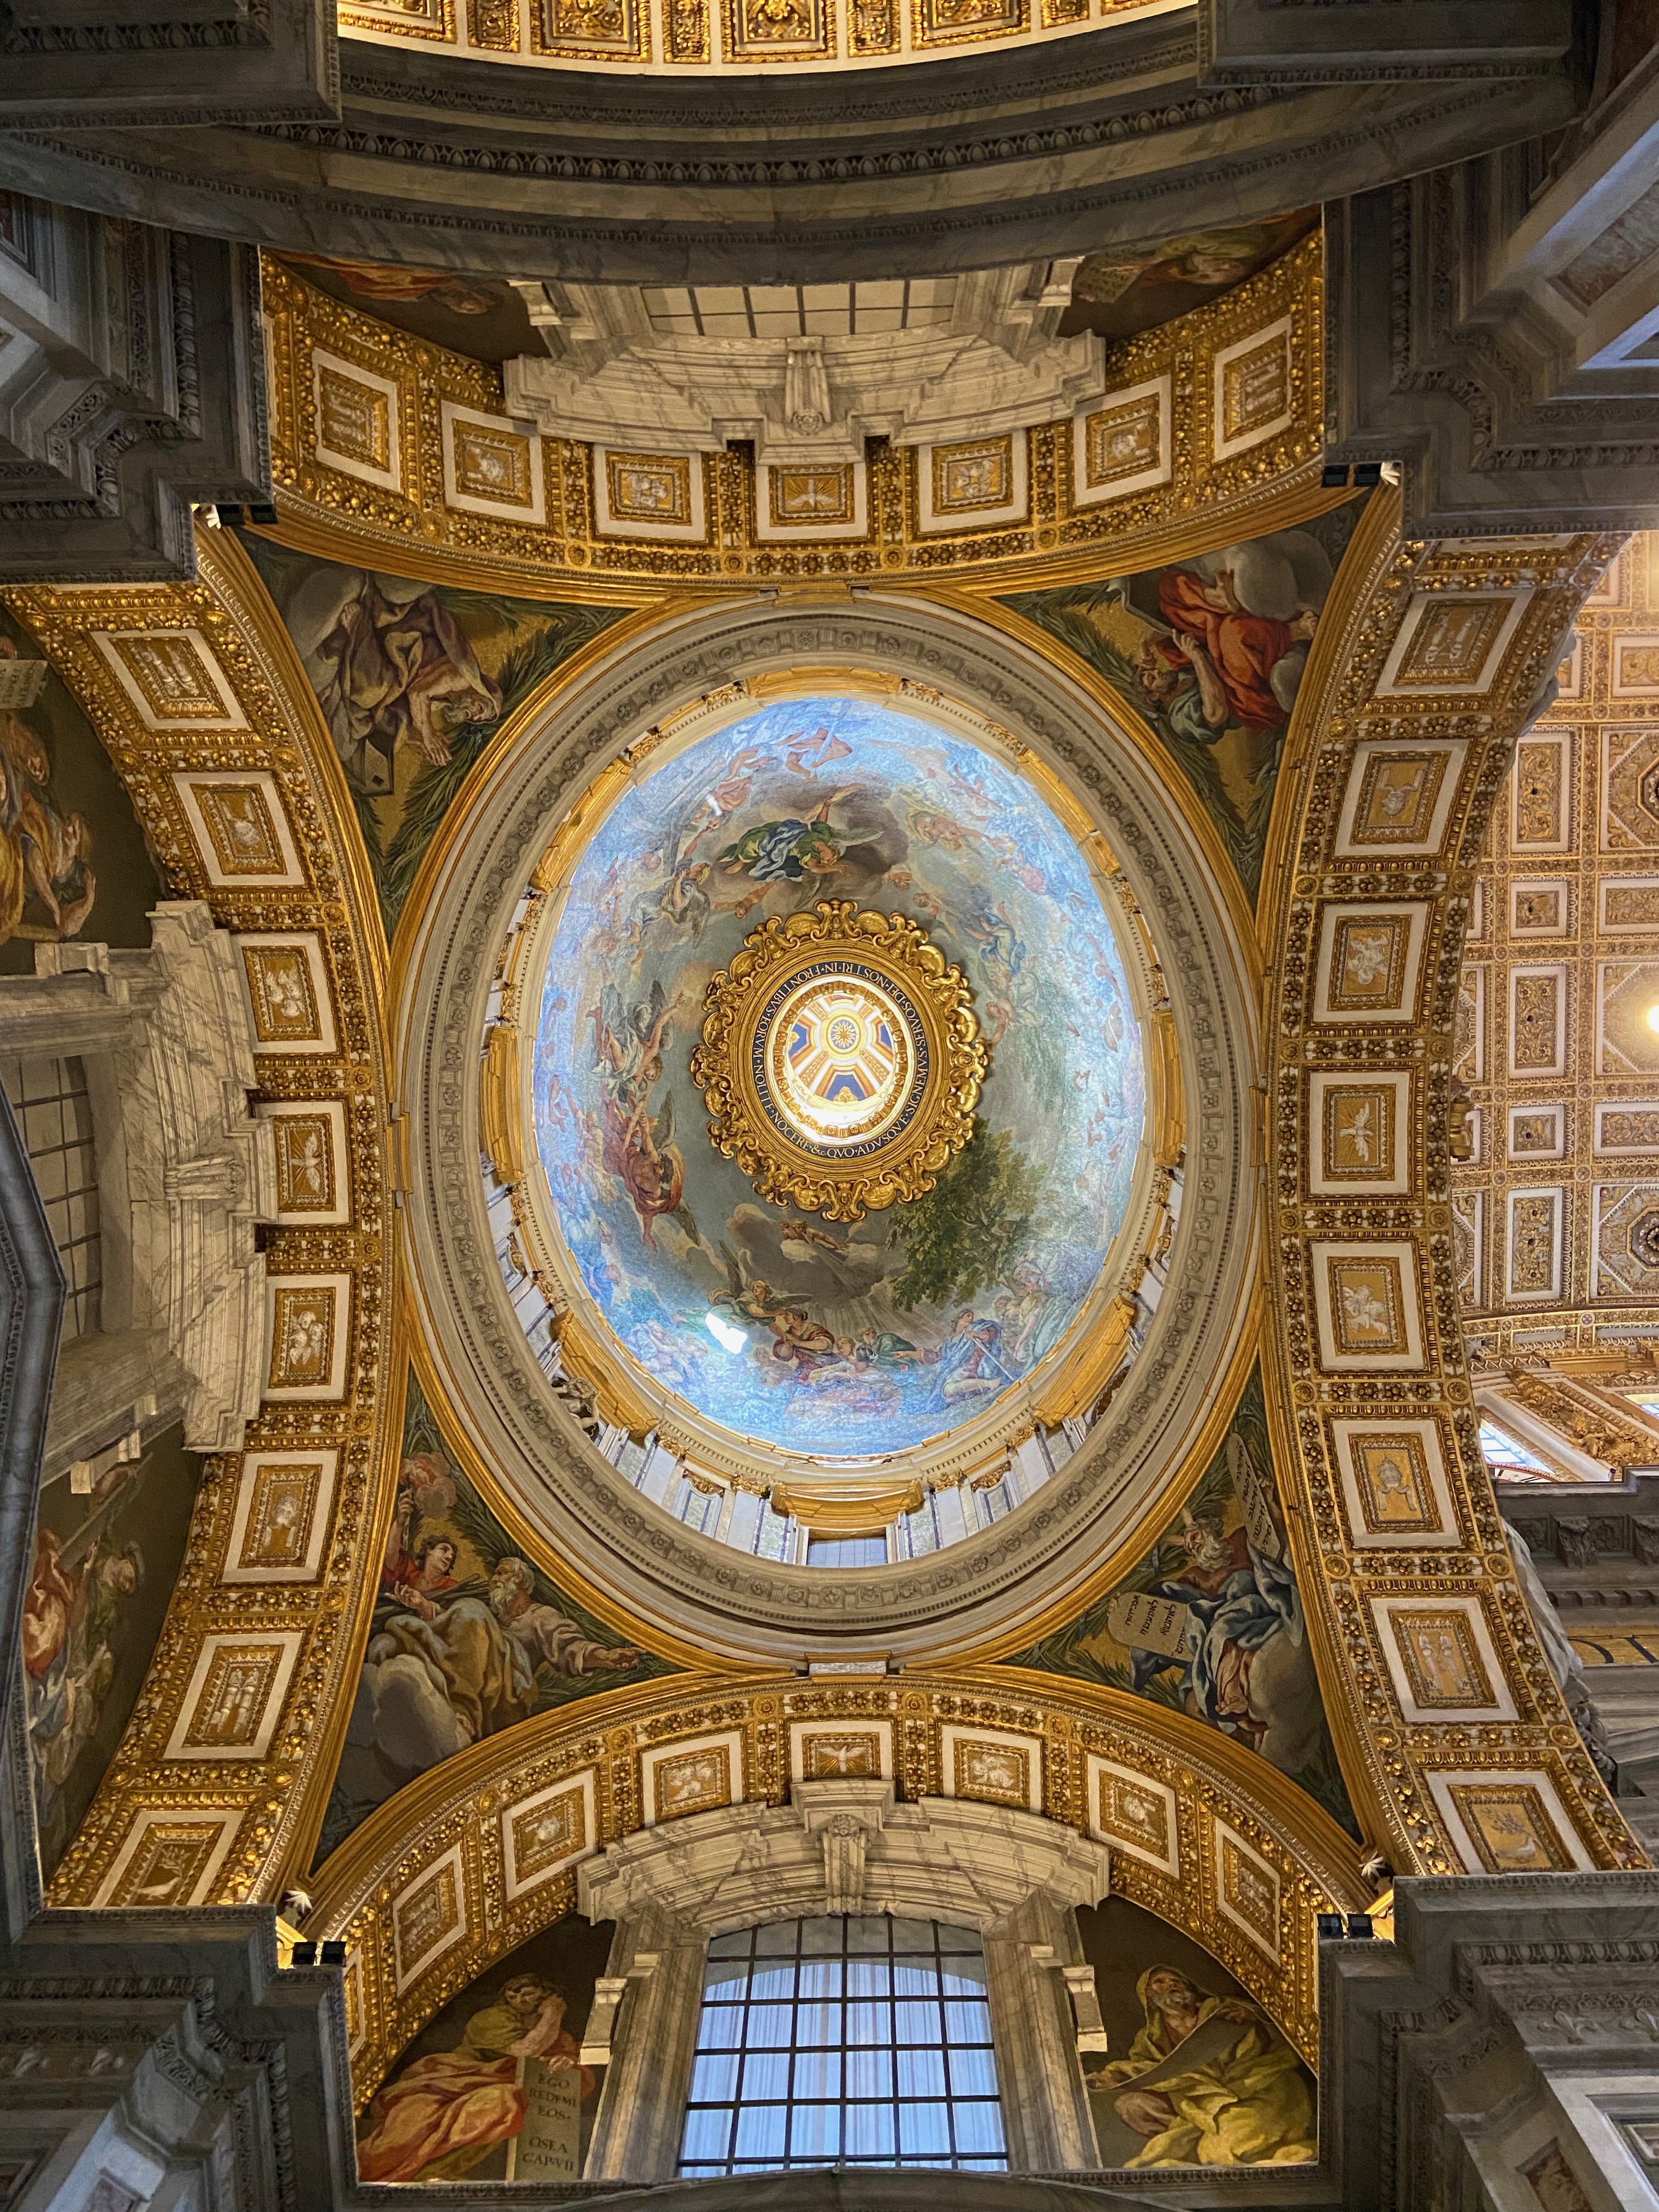 Roof artwork in St. Peter's Basilica.